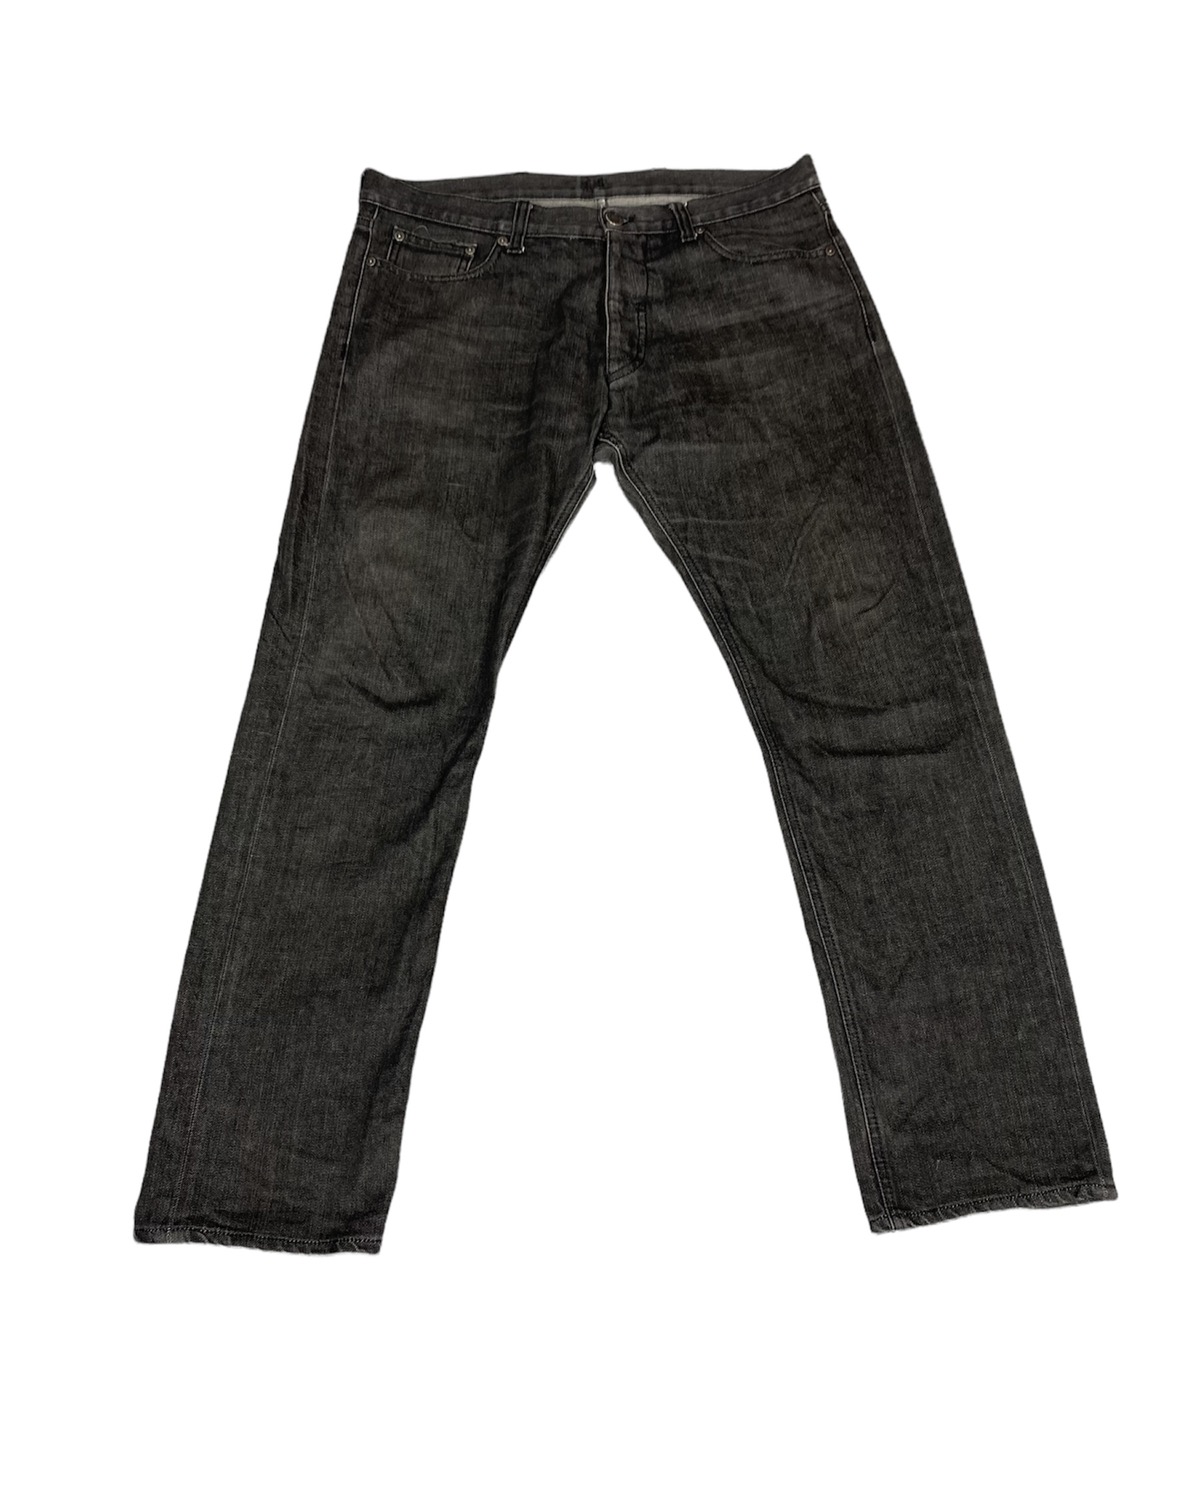 Neil Barrett Buckle Back Denim jeans - 2